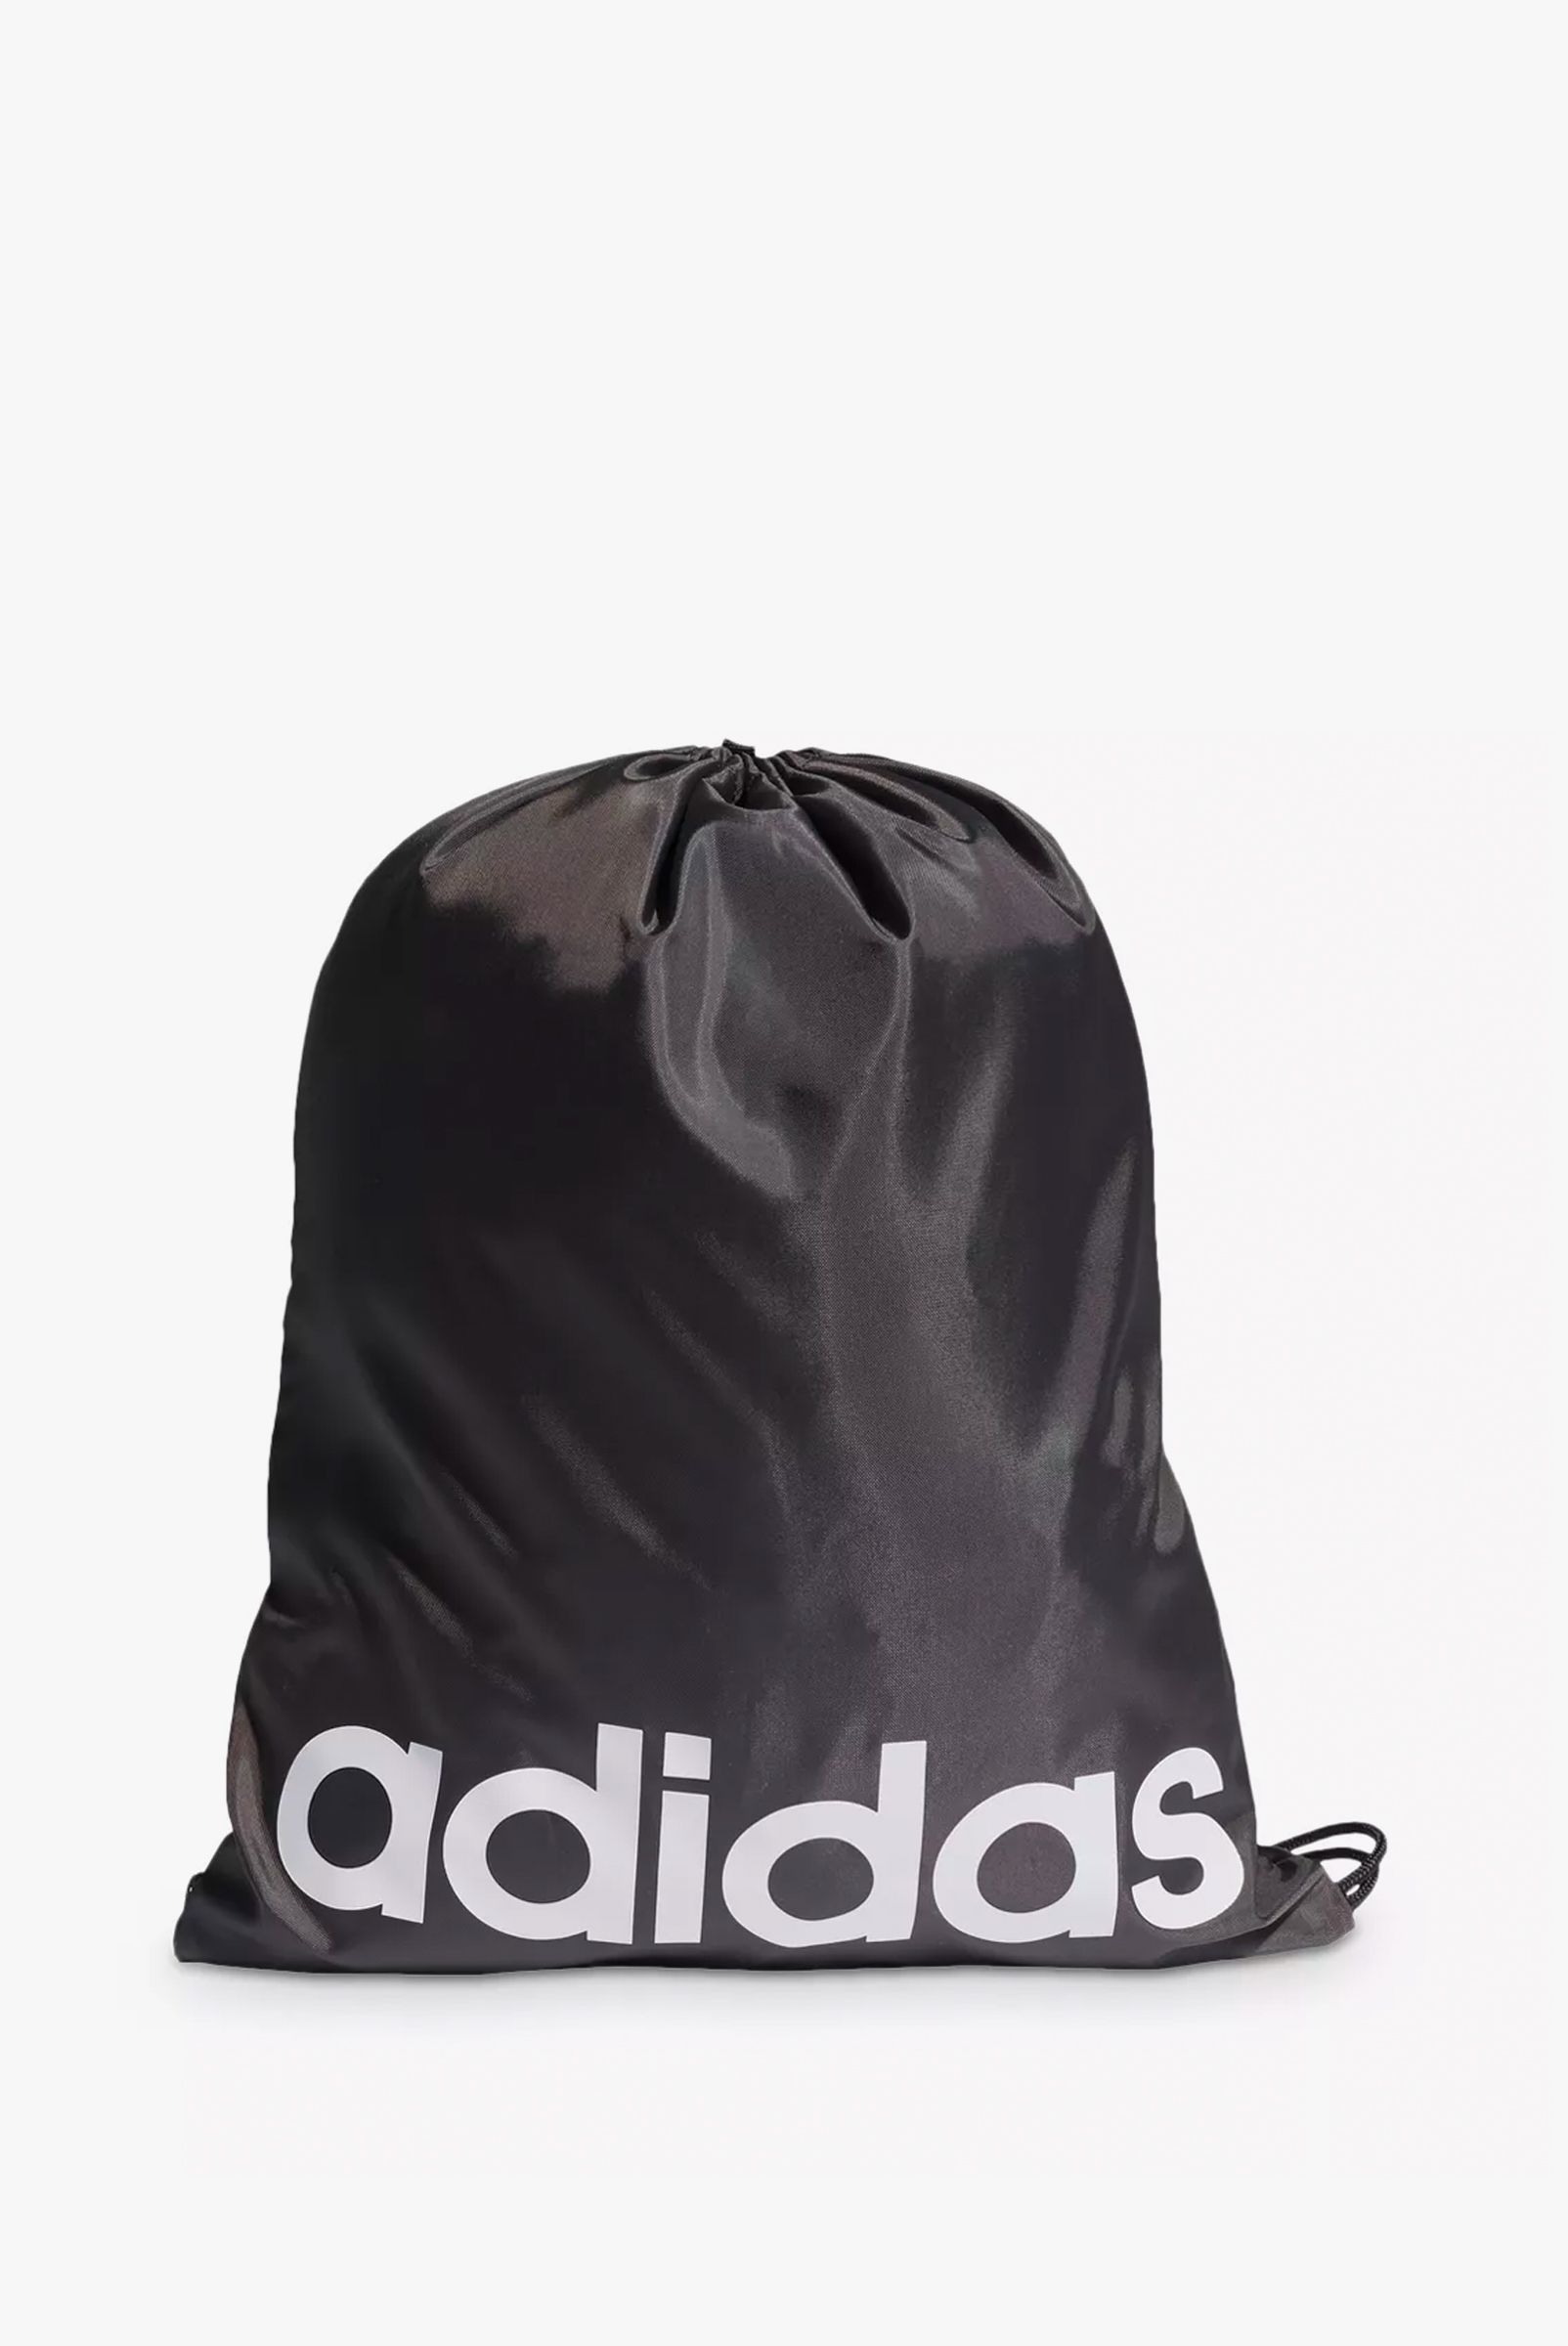 Adidas Essentials Sack, £12